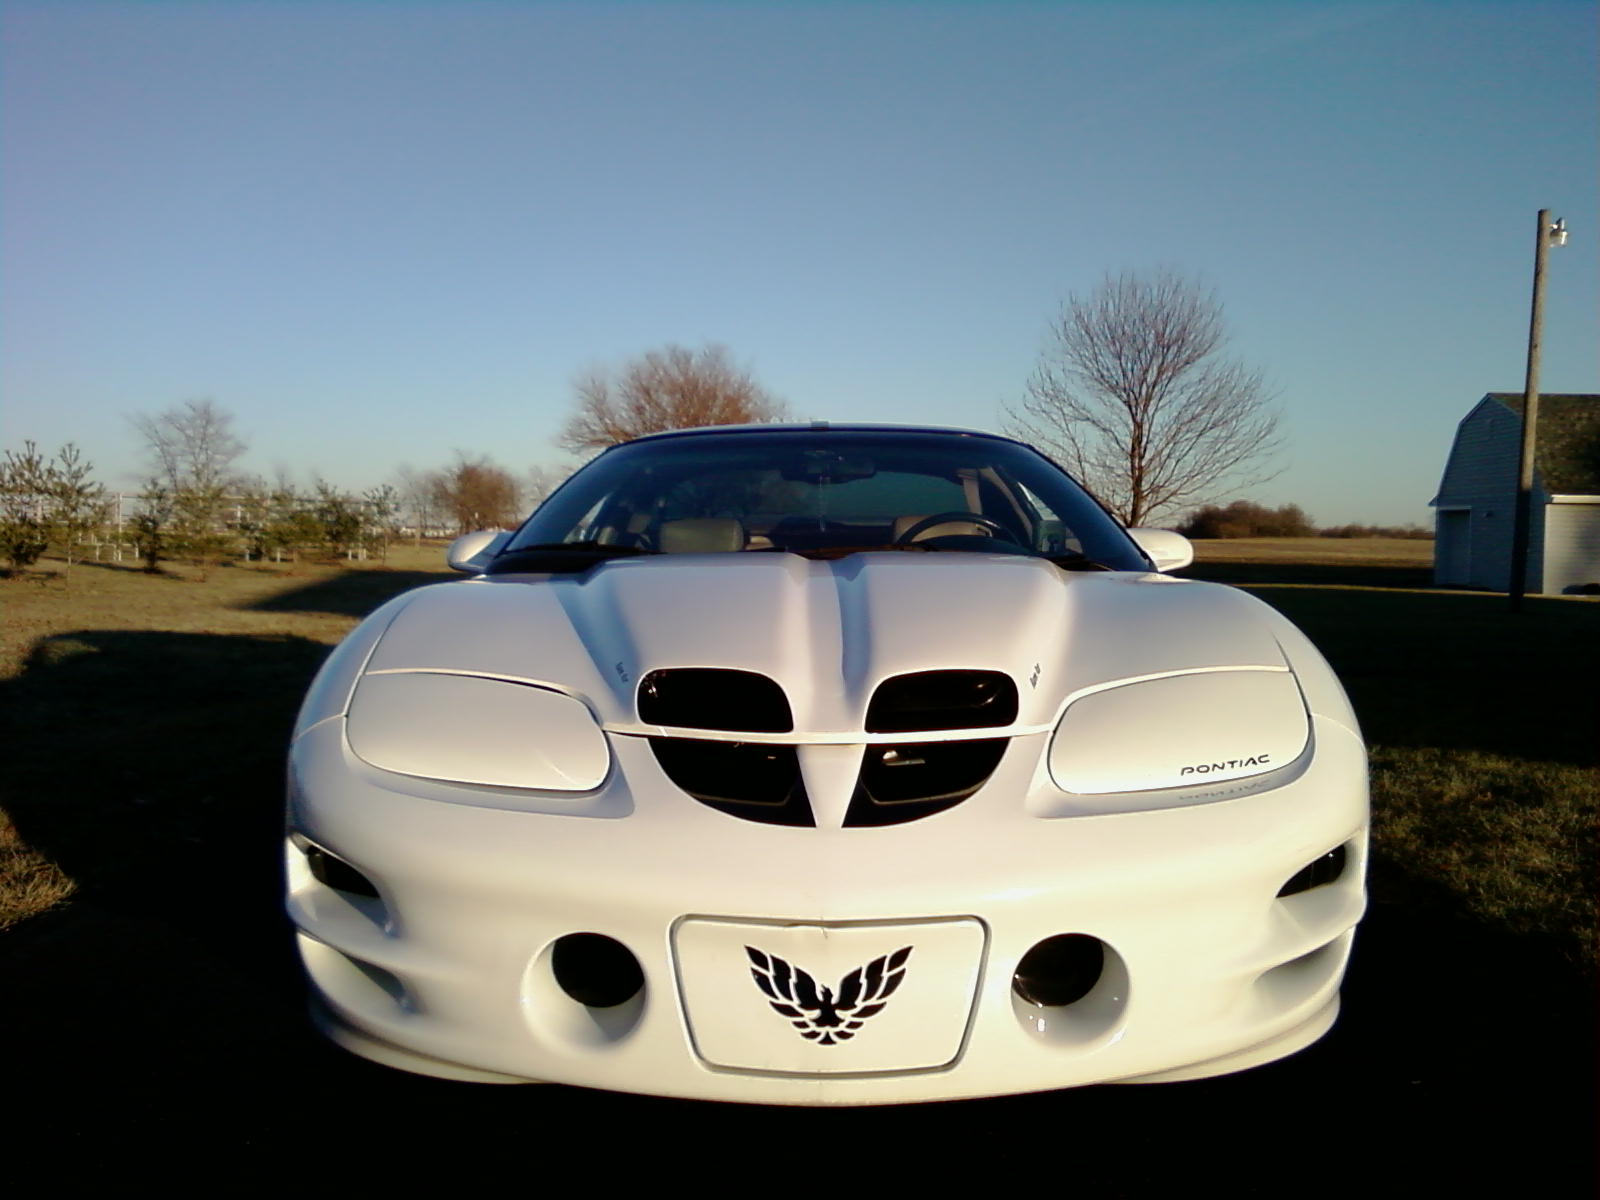  1998 Pontiac Trans Am Nitrous